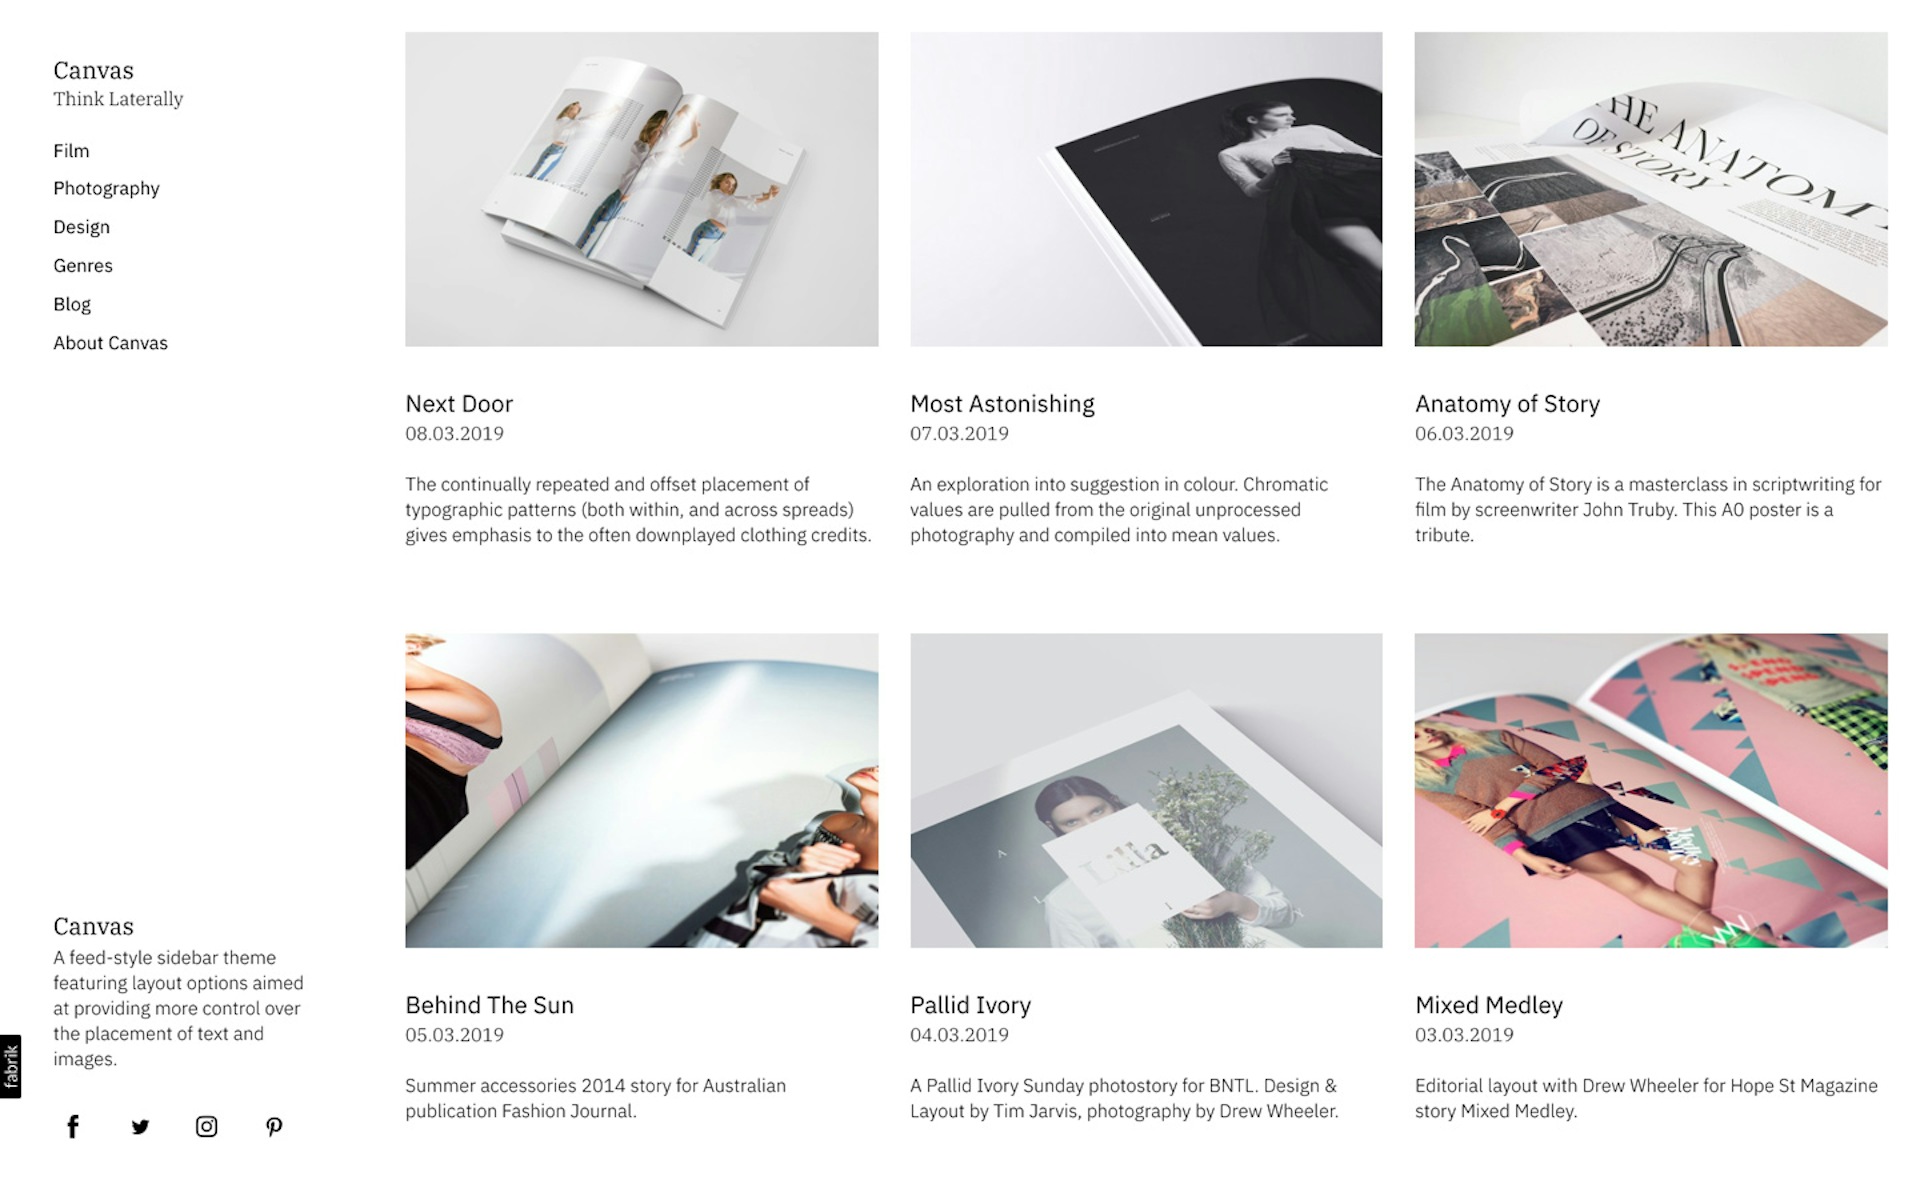 Canvas theme for Fabrik portfolio website